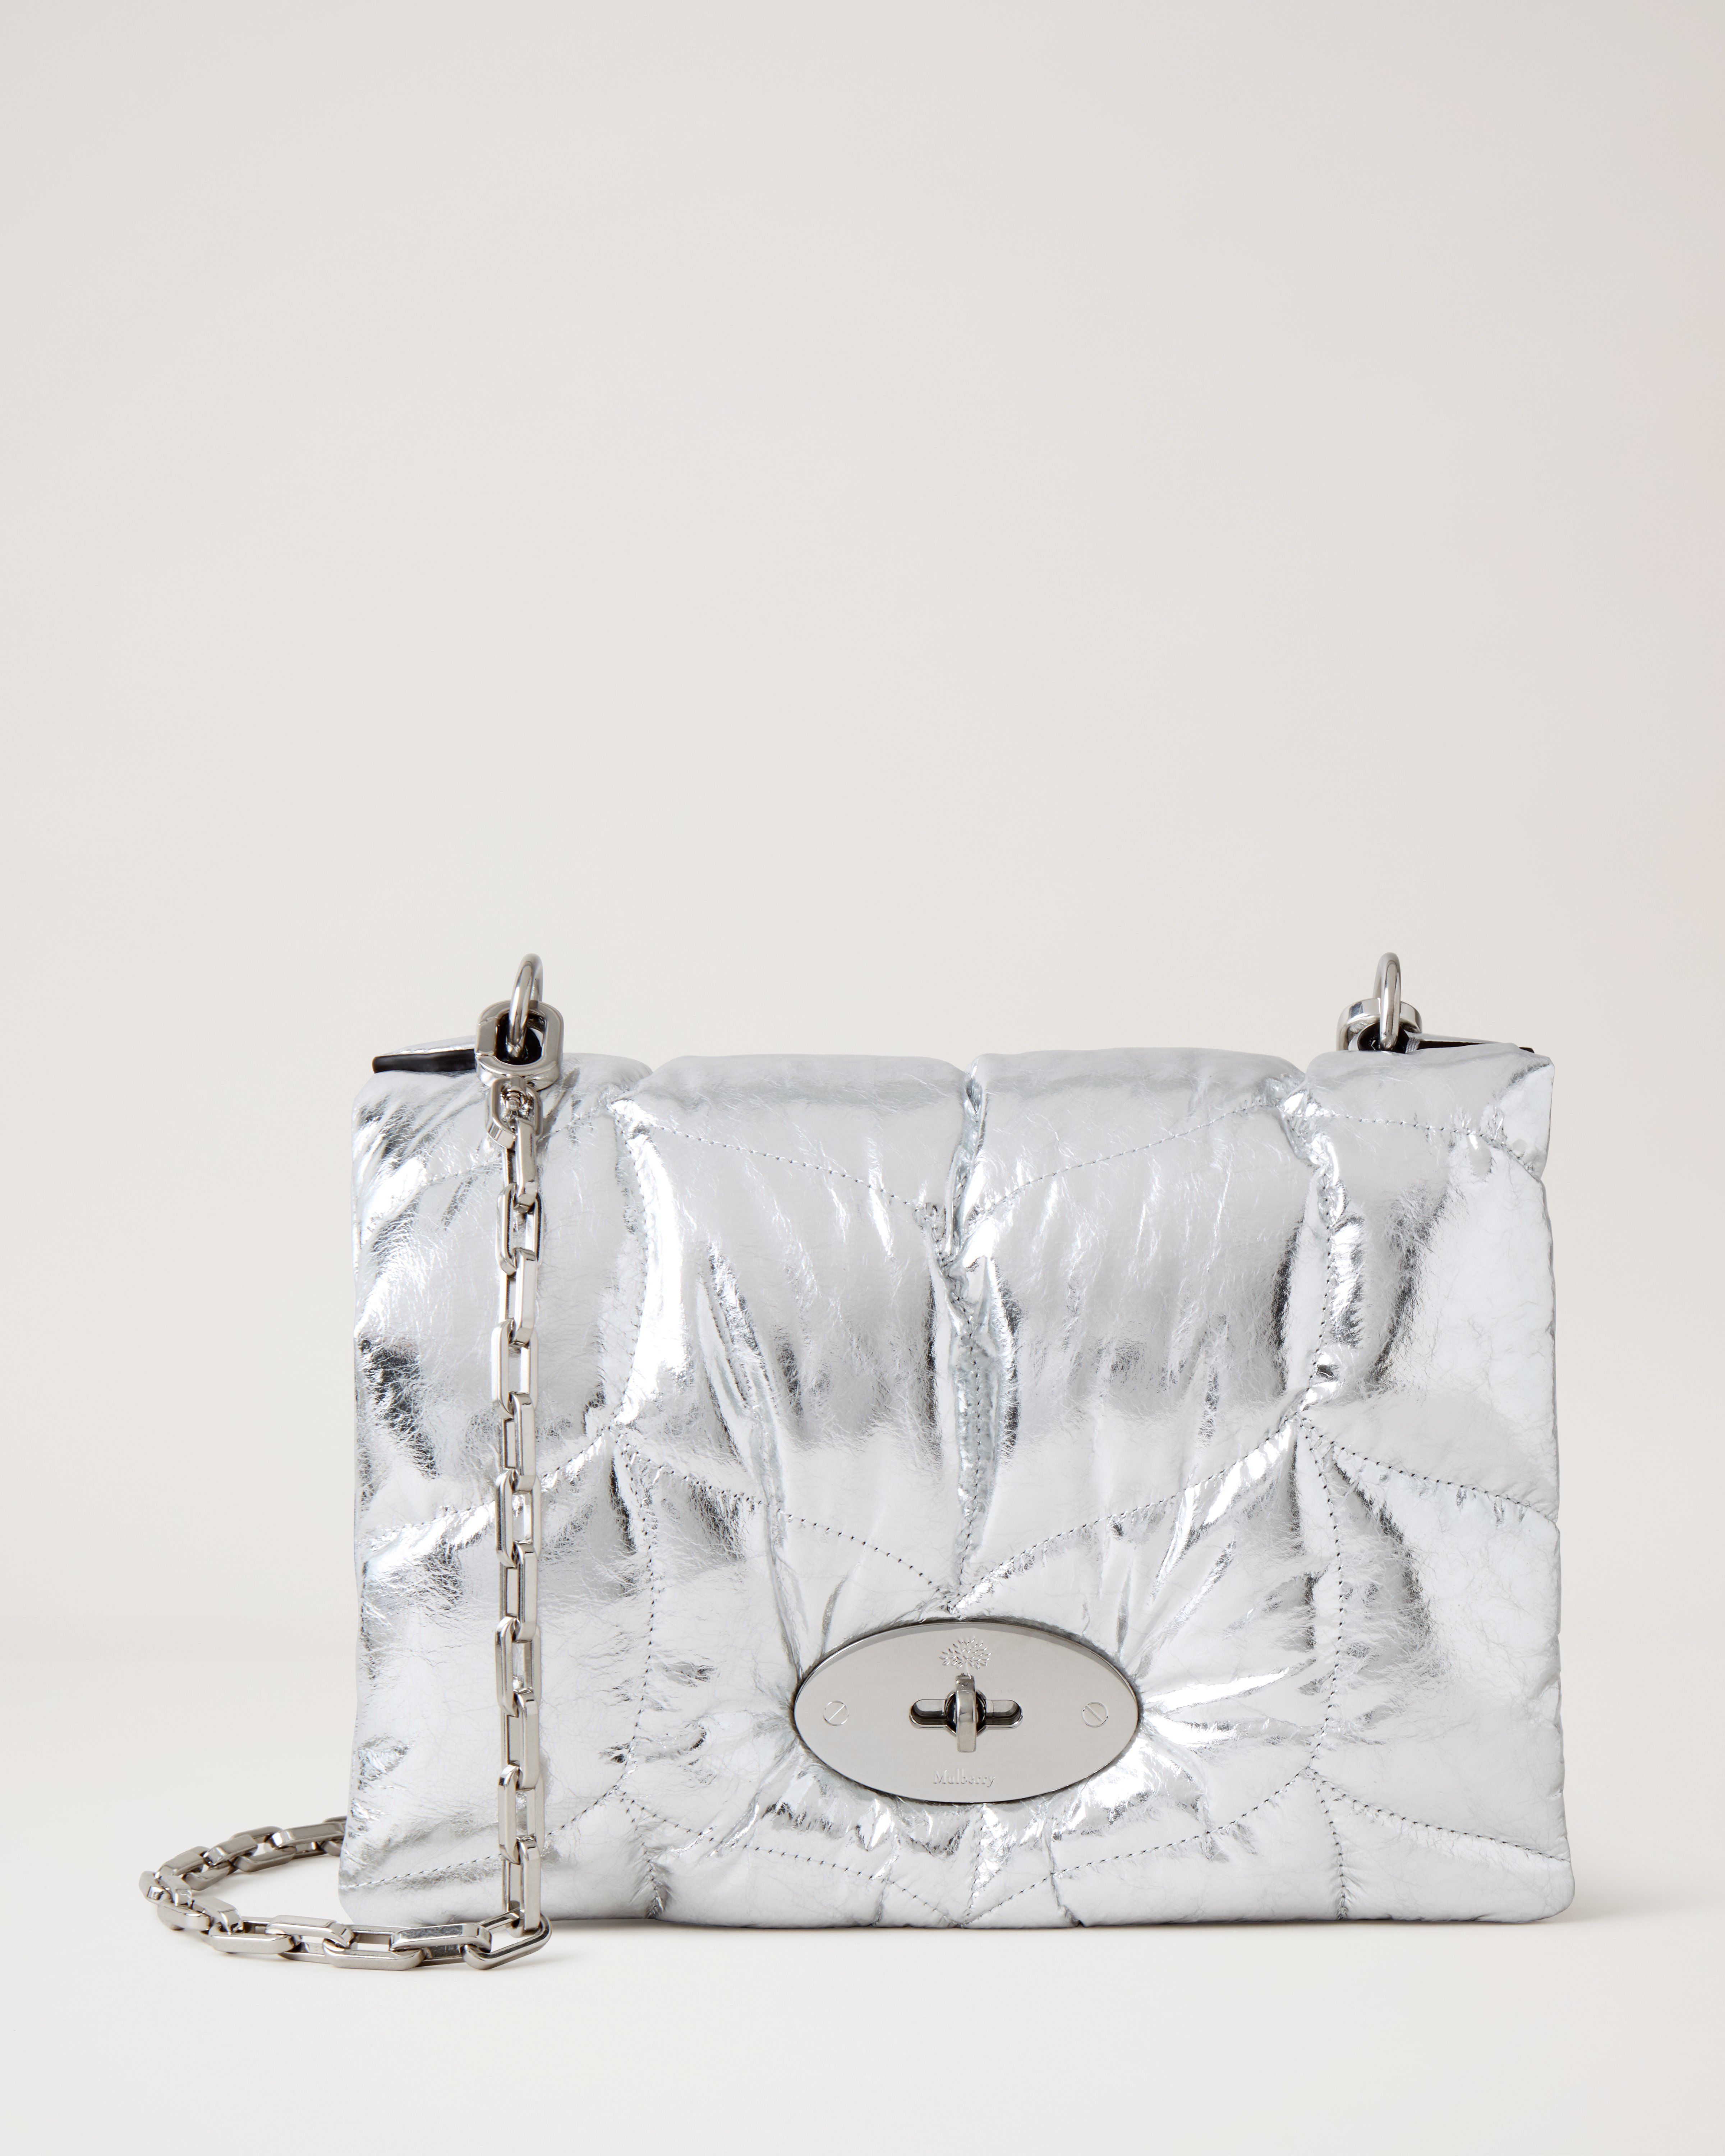 Fashionable Silver Women's Foldable Single Shoulder Crossbody Bag